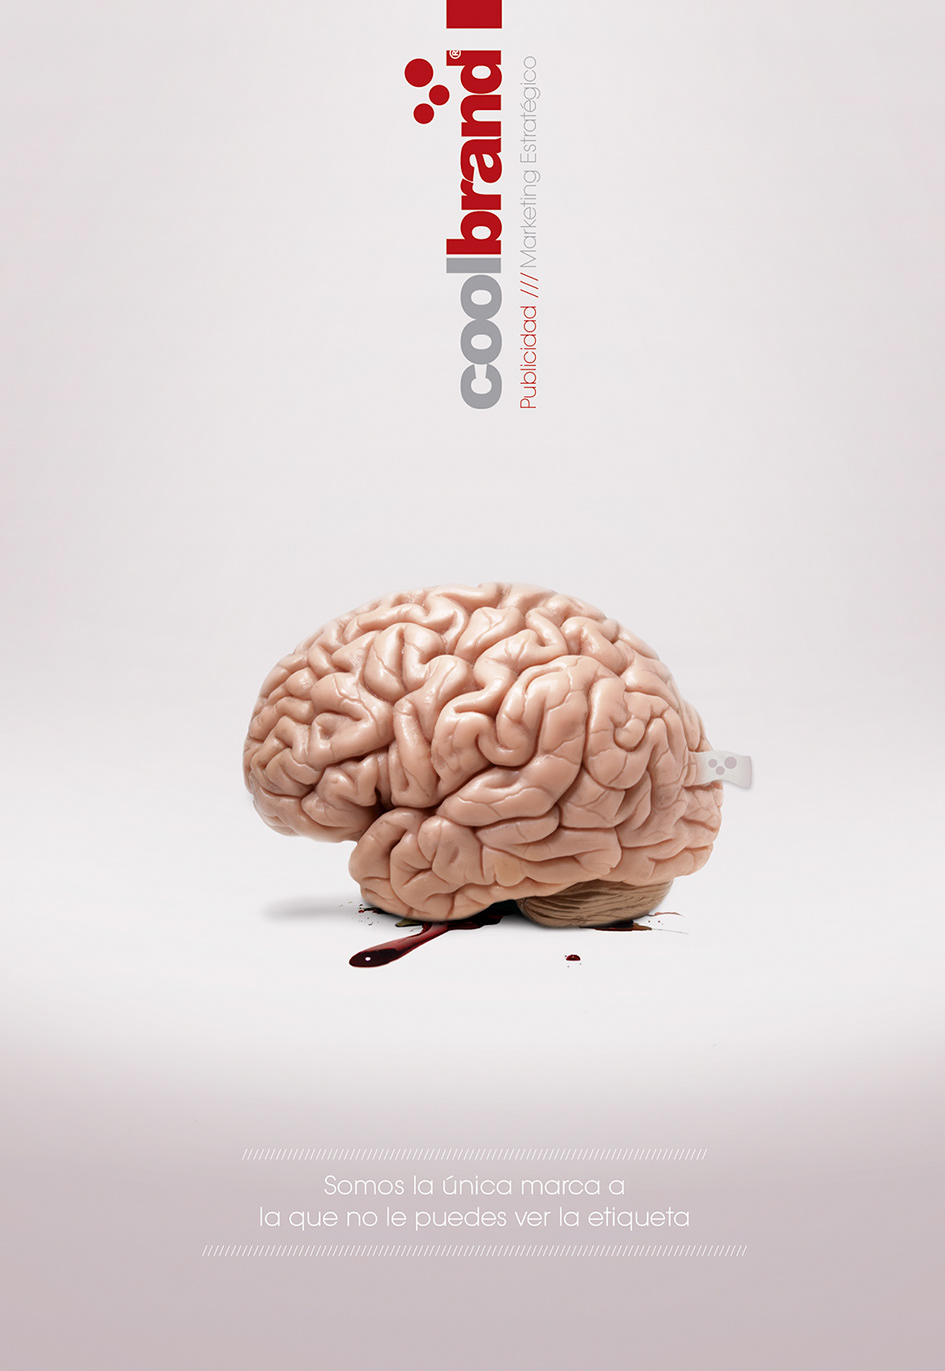 agency coolbrand strategic marketing   brain idea cool blood fresh new creative ad Label brand